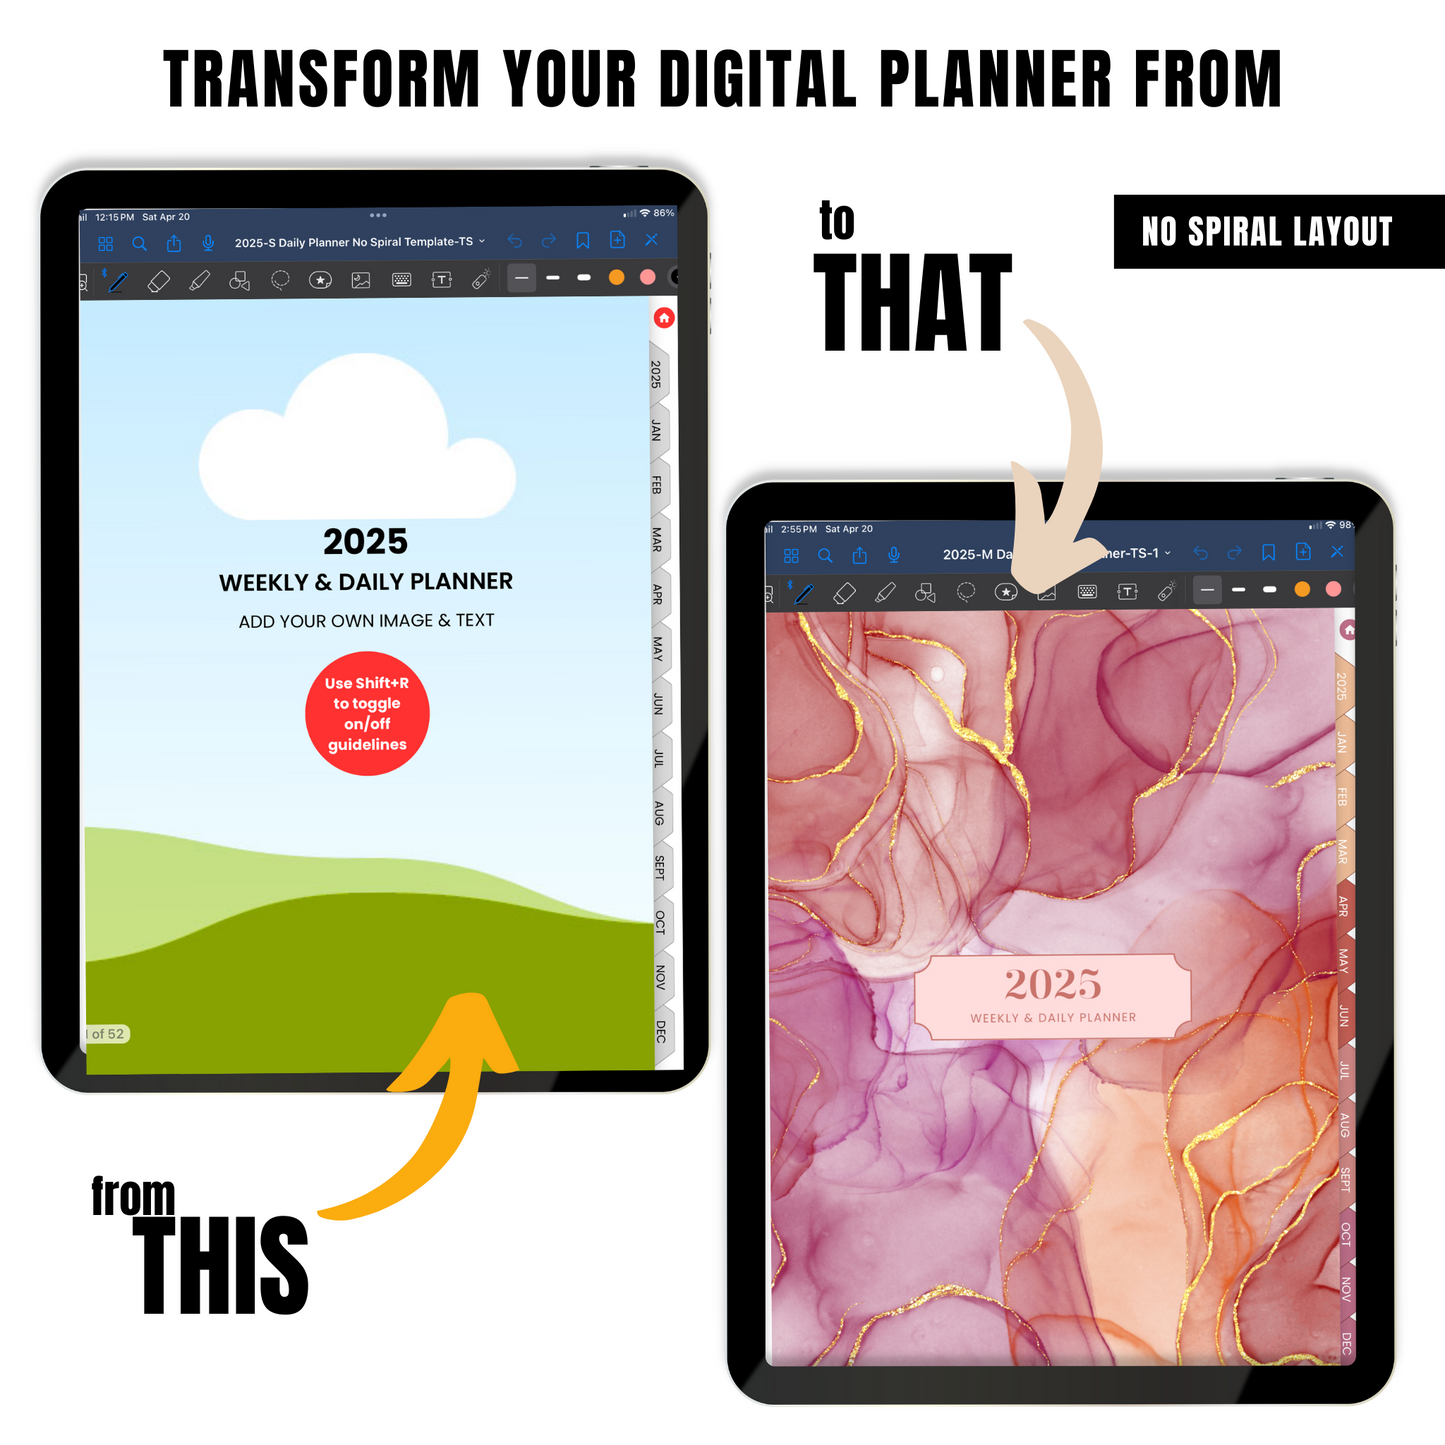 2025 Digital Planner Template - PLR